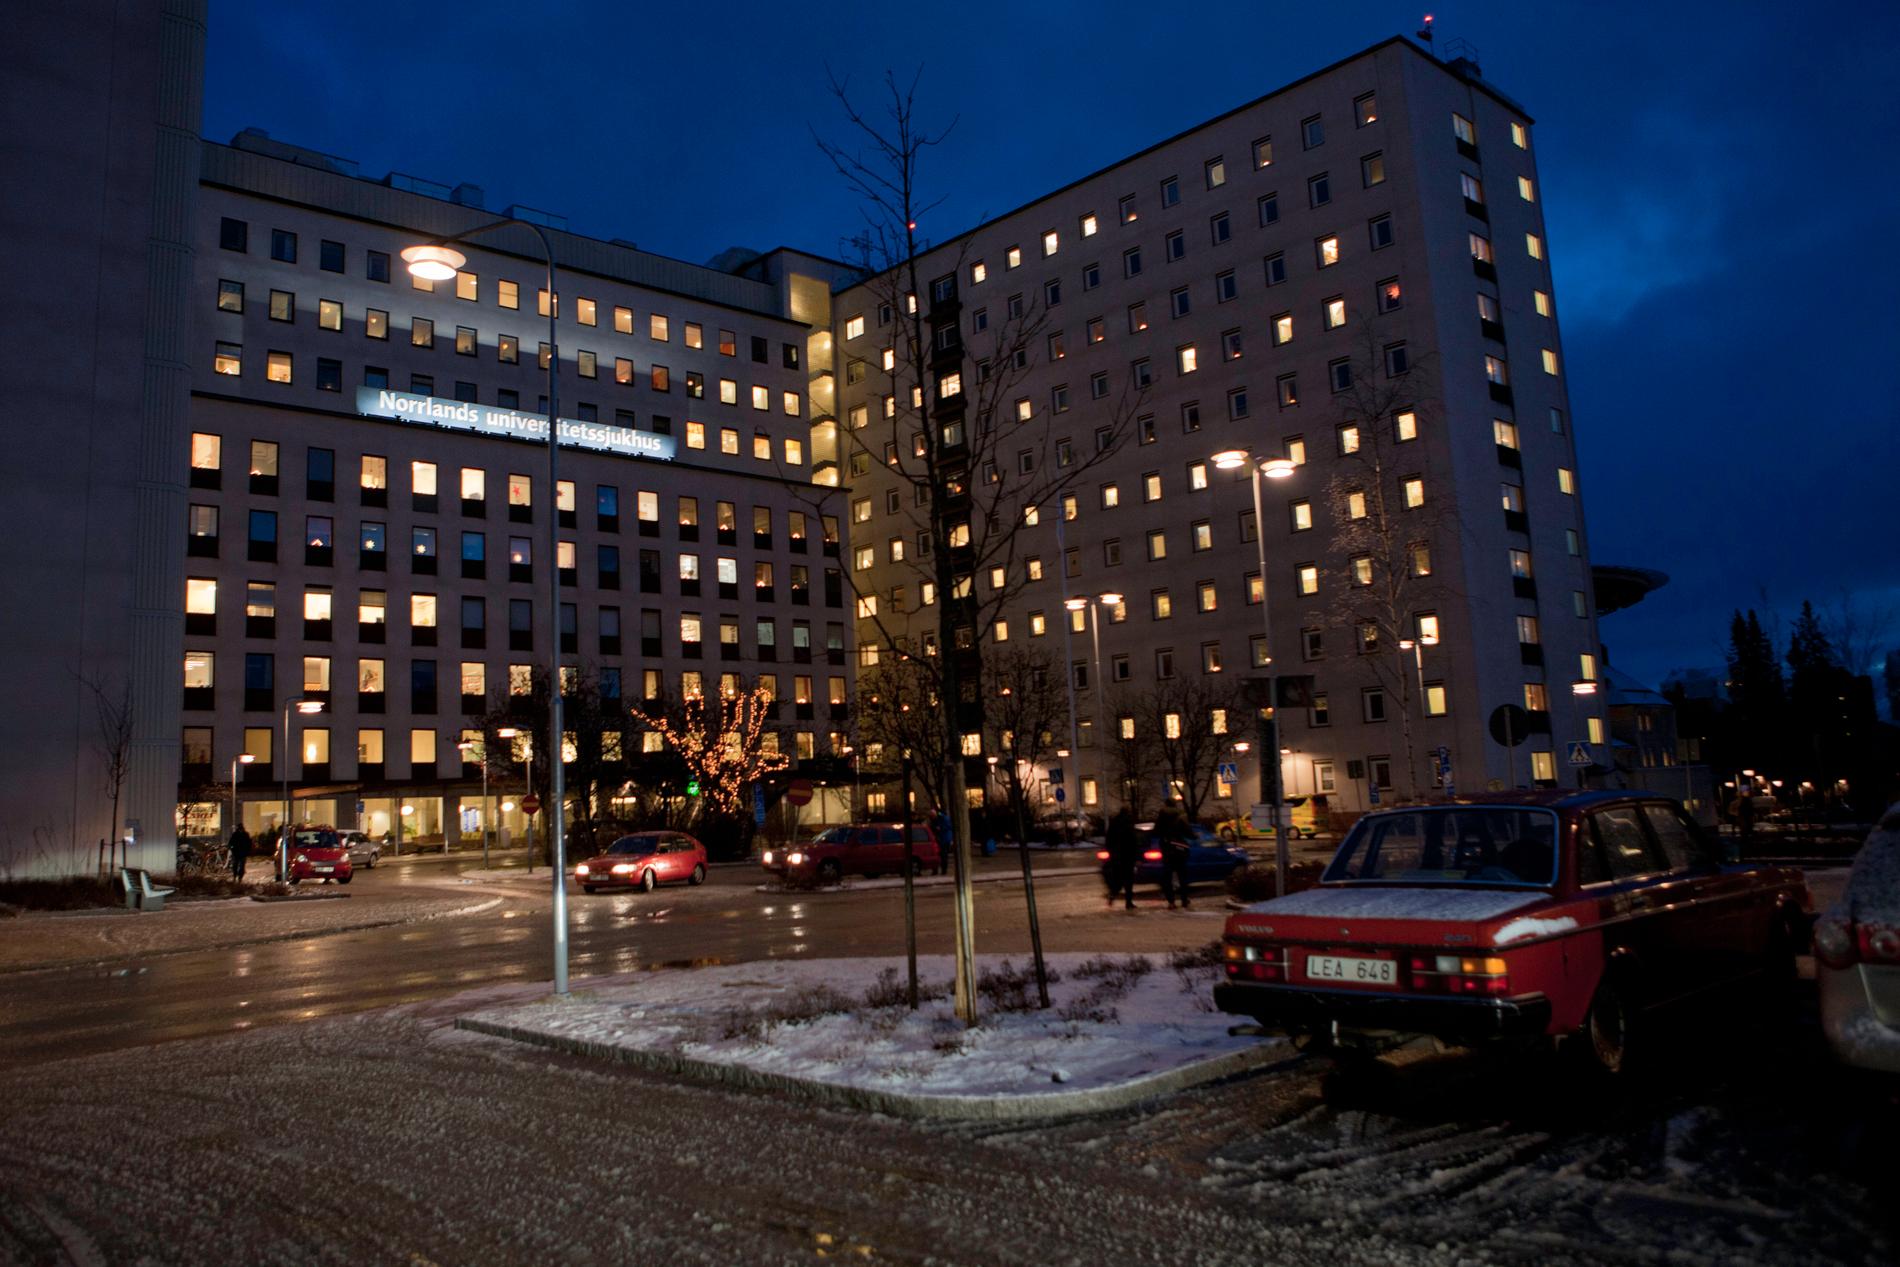 Norrlands universitetssjukhus i Umeå. Arkivbild.